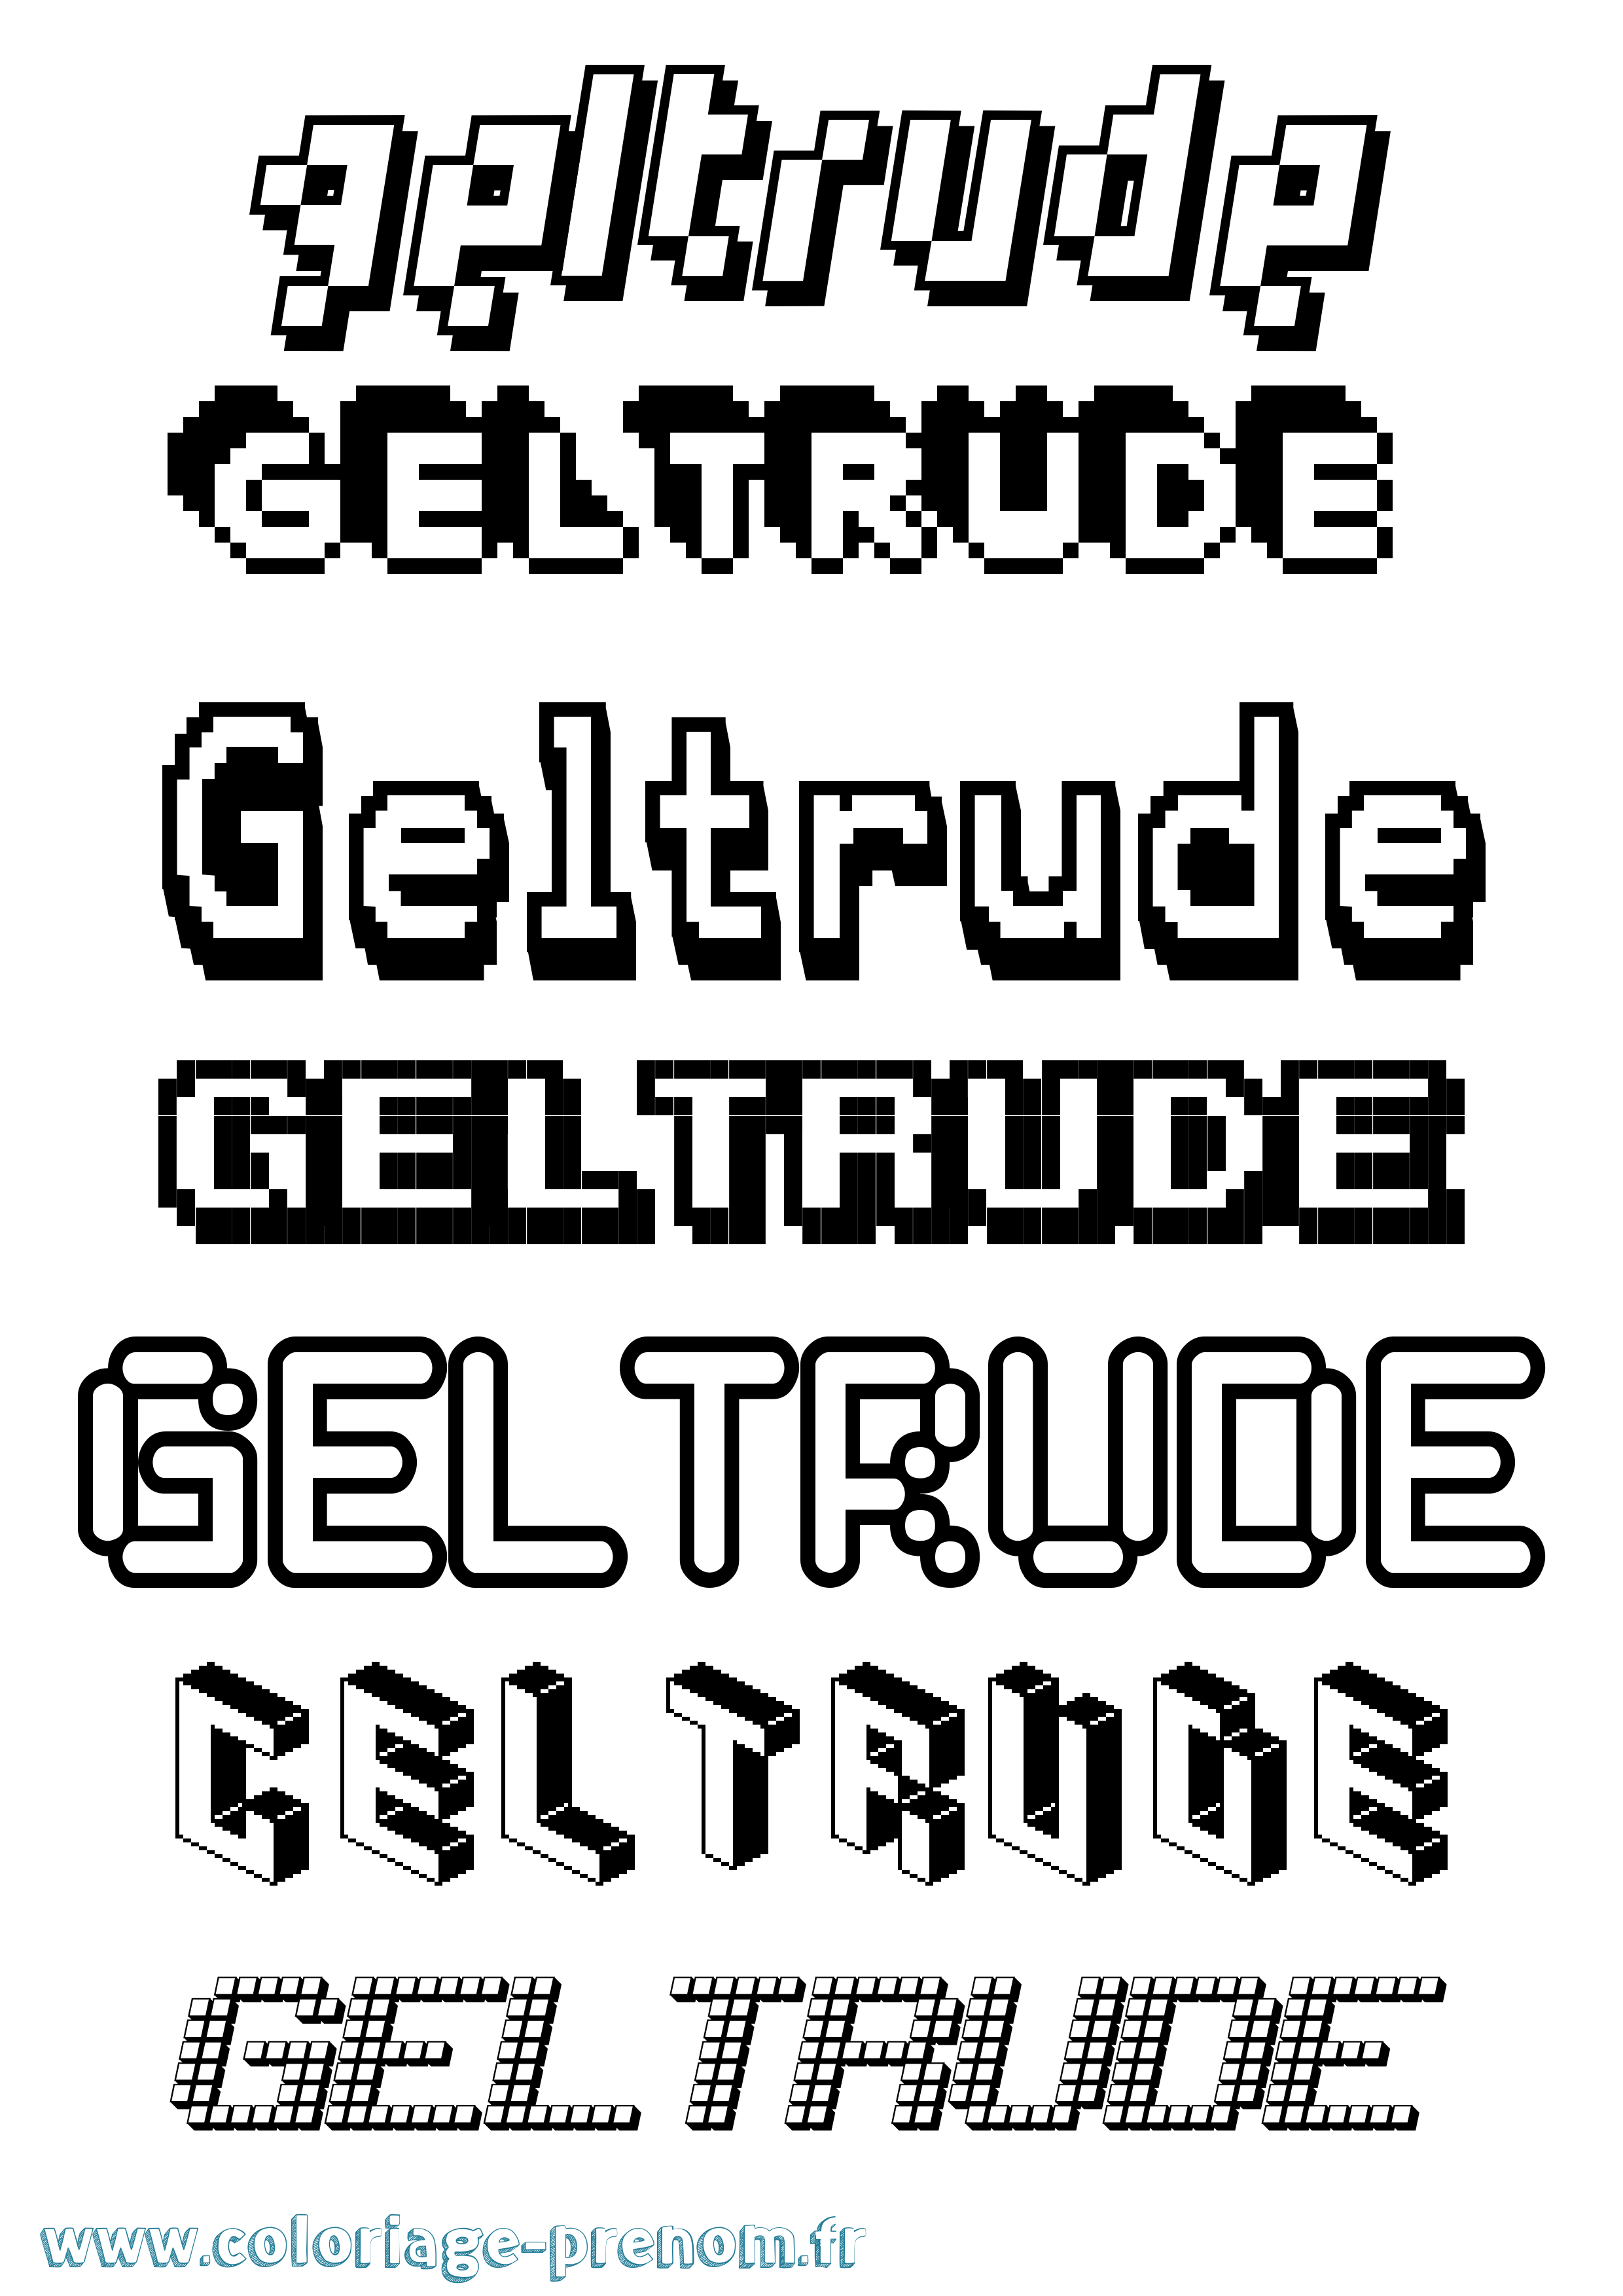 Coloriage prénom Geltrude Pixel